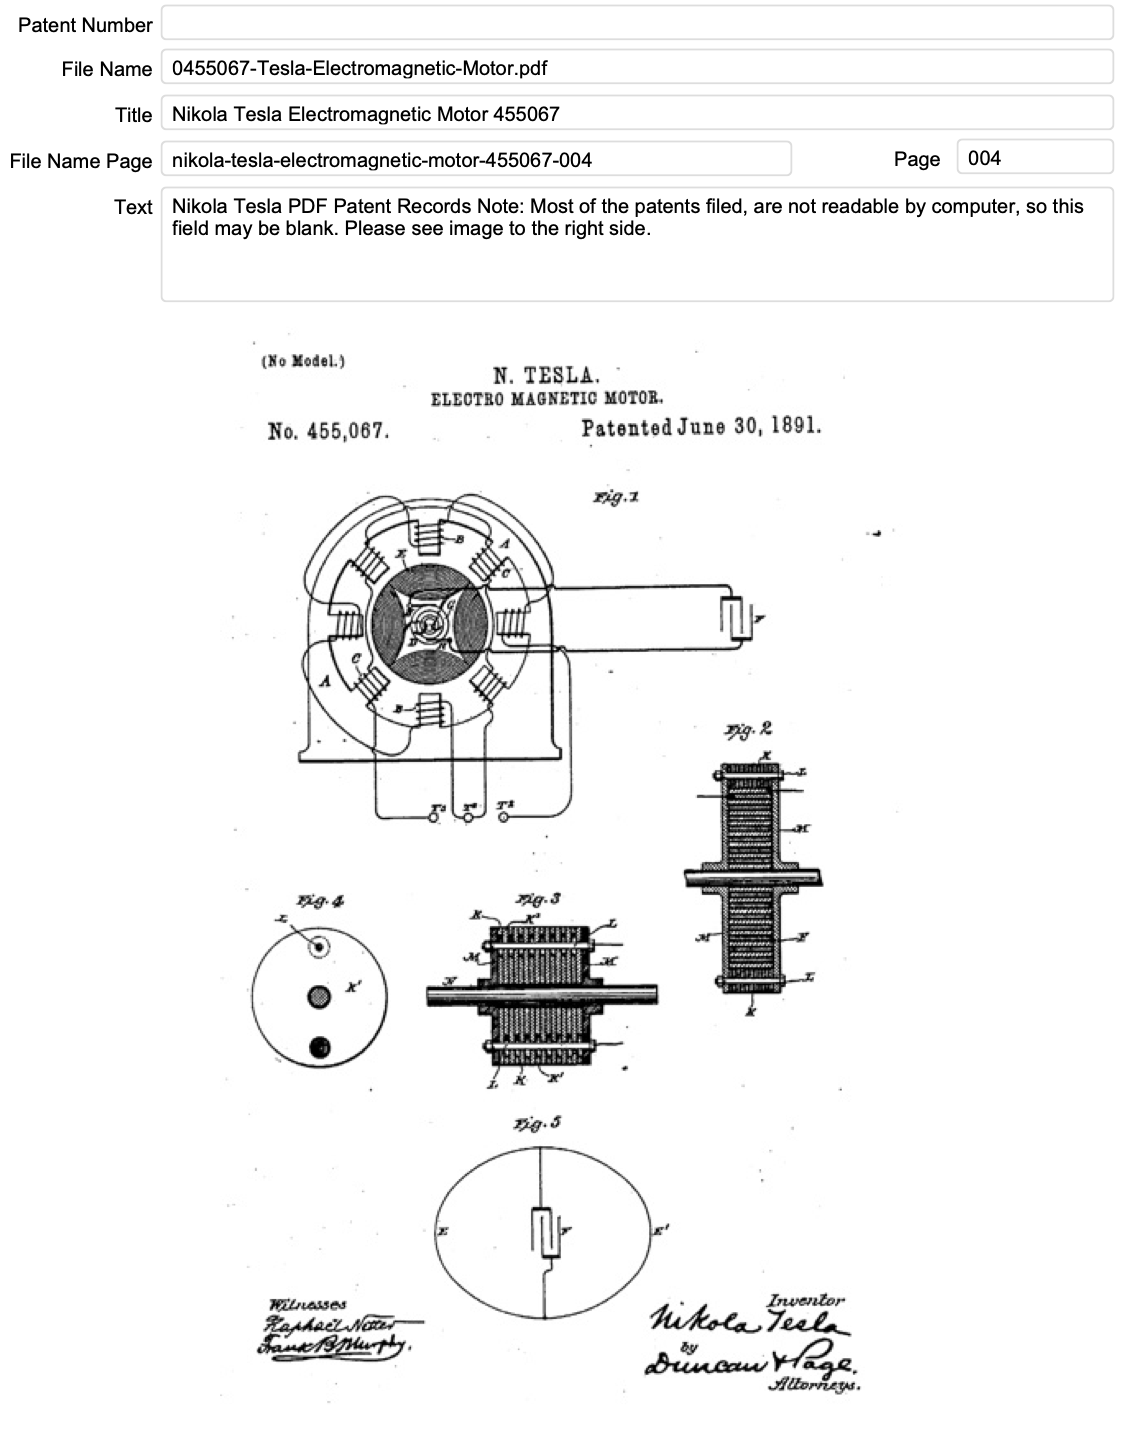 FileMaker Nikola Tesla Patents from USPTO